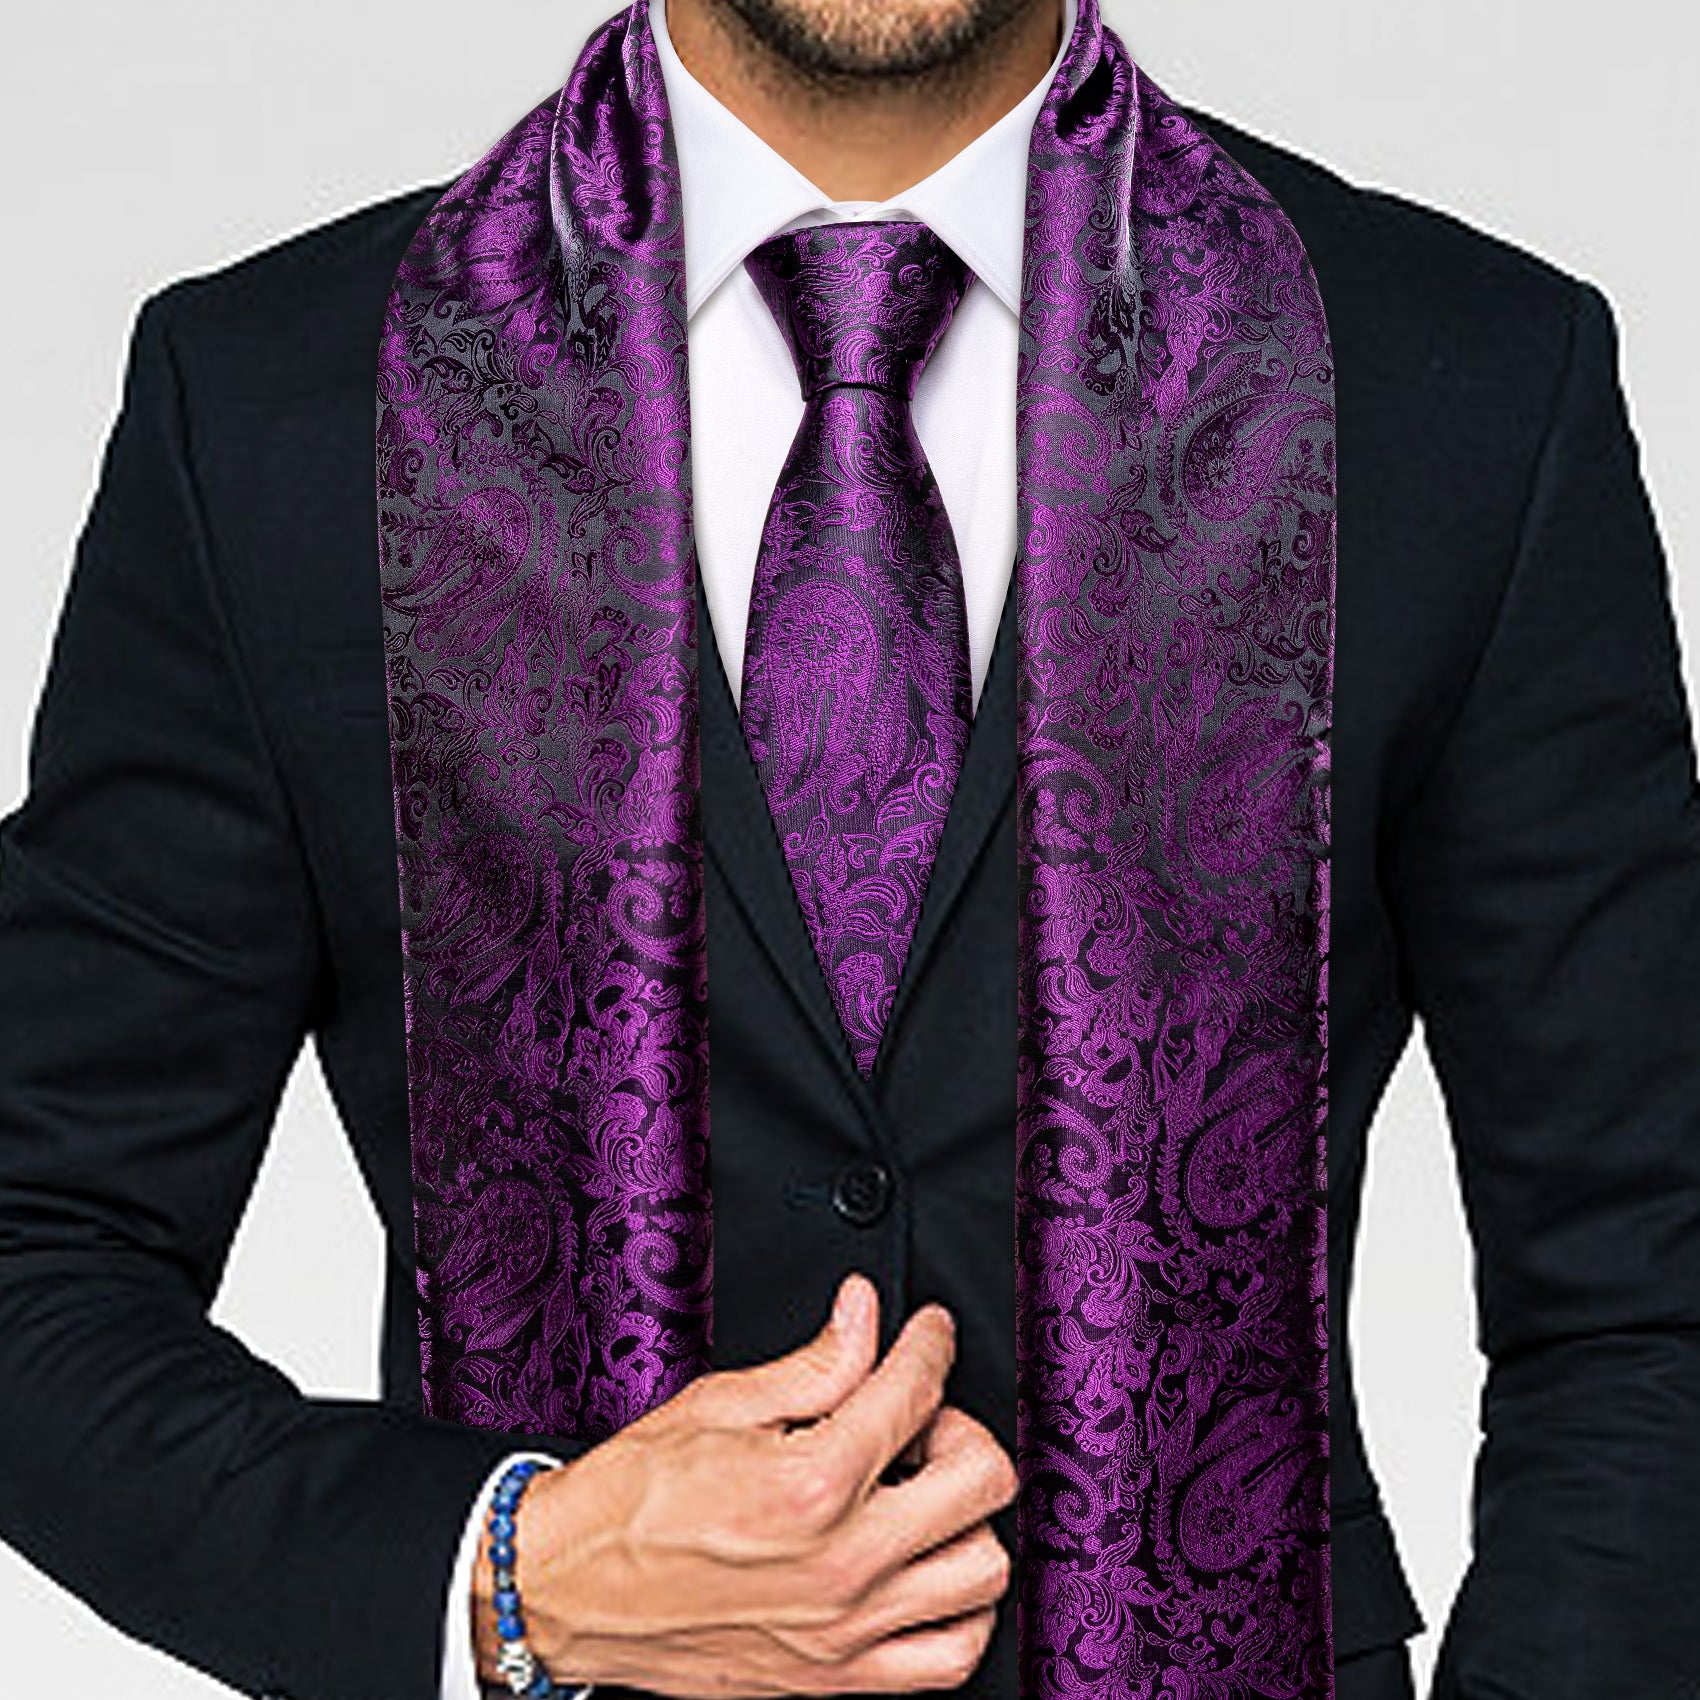 Barry.wang Black Tie Scarf Purple Jacquard Floral Men's Scarf Tie Set Luxury